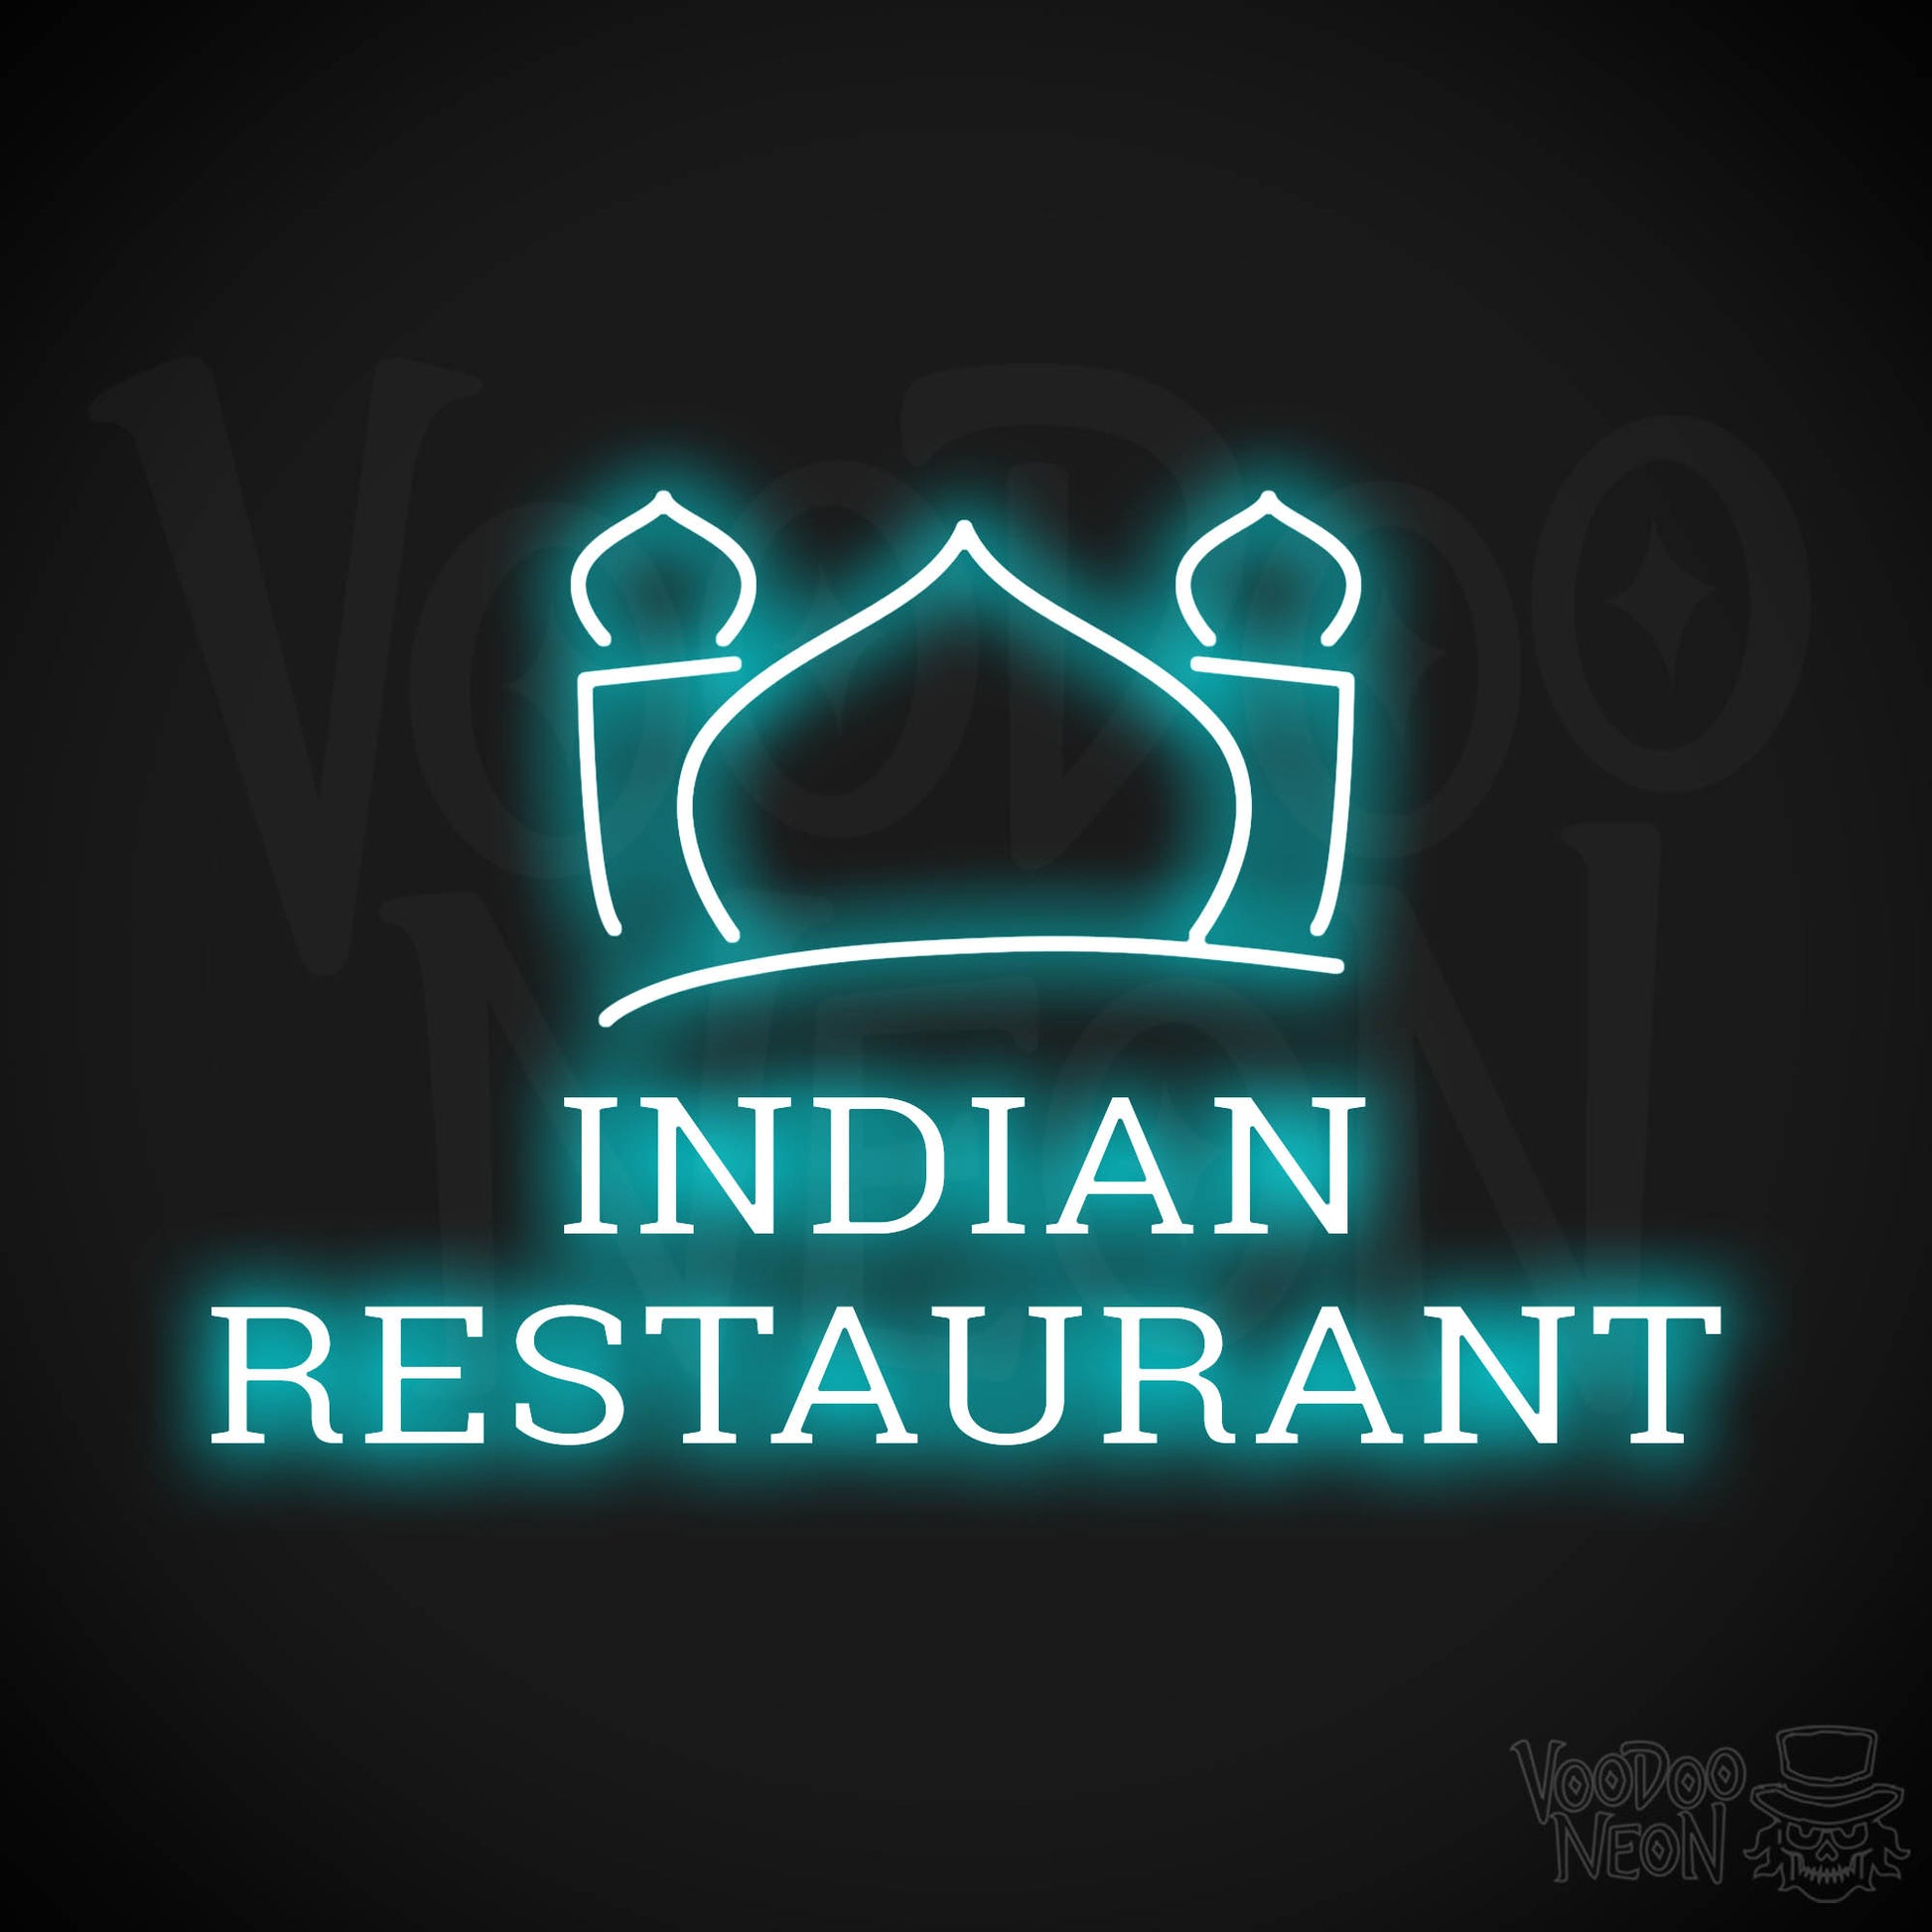 Indian Restaurant LED Neon - Ice Blue